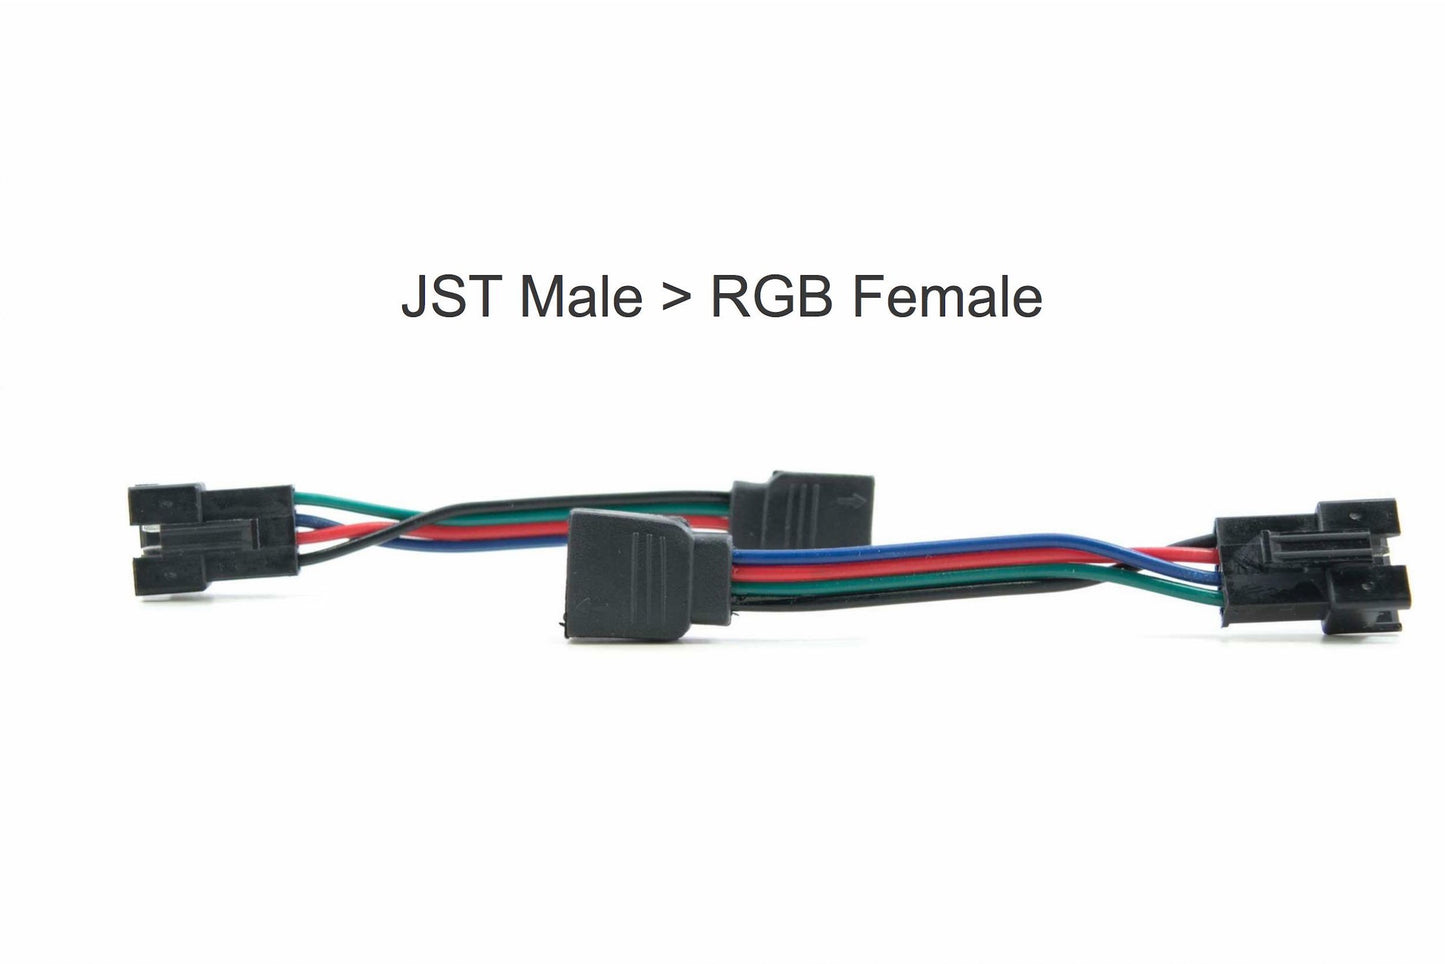 Adapter: JST Female > JST Female (4 Pin)